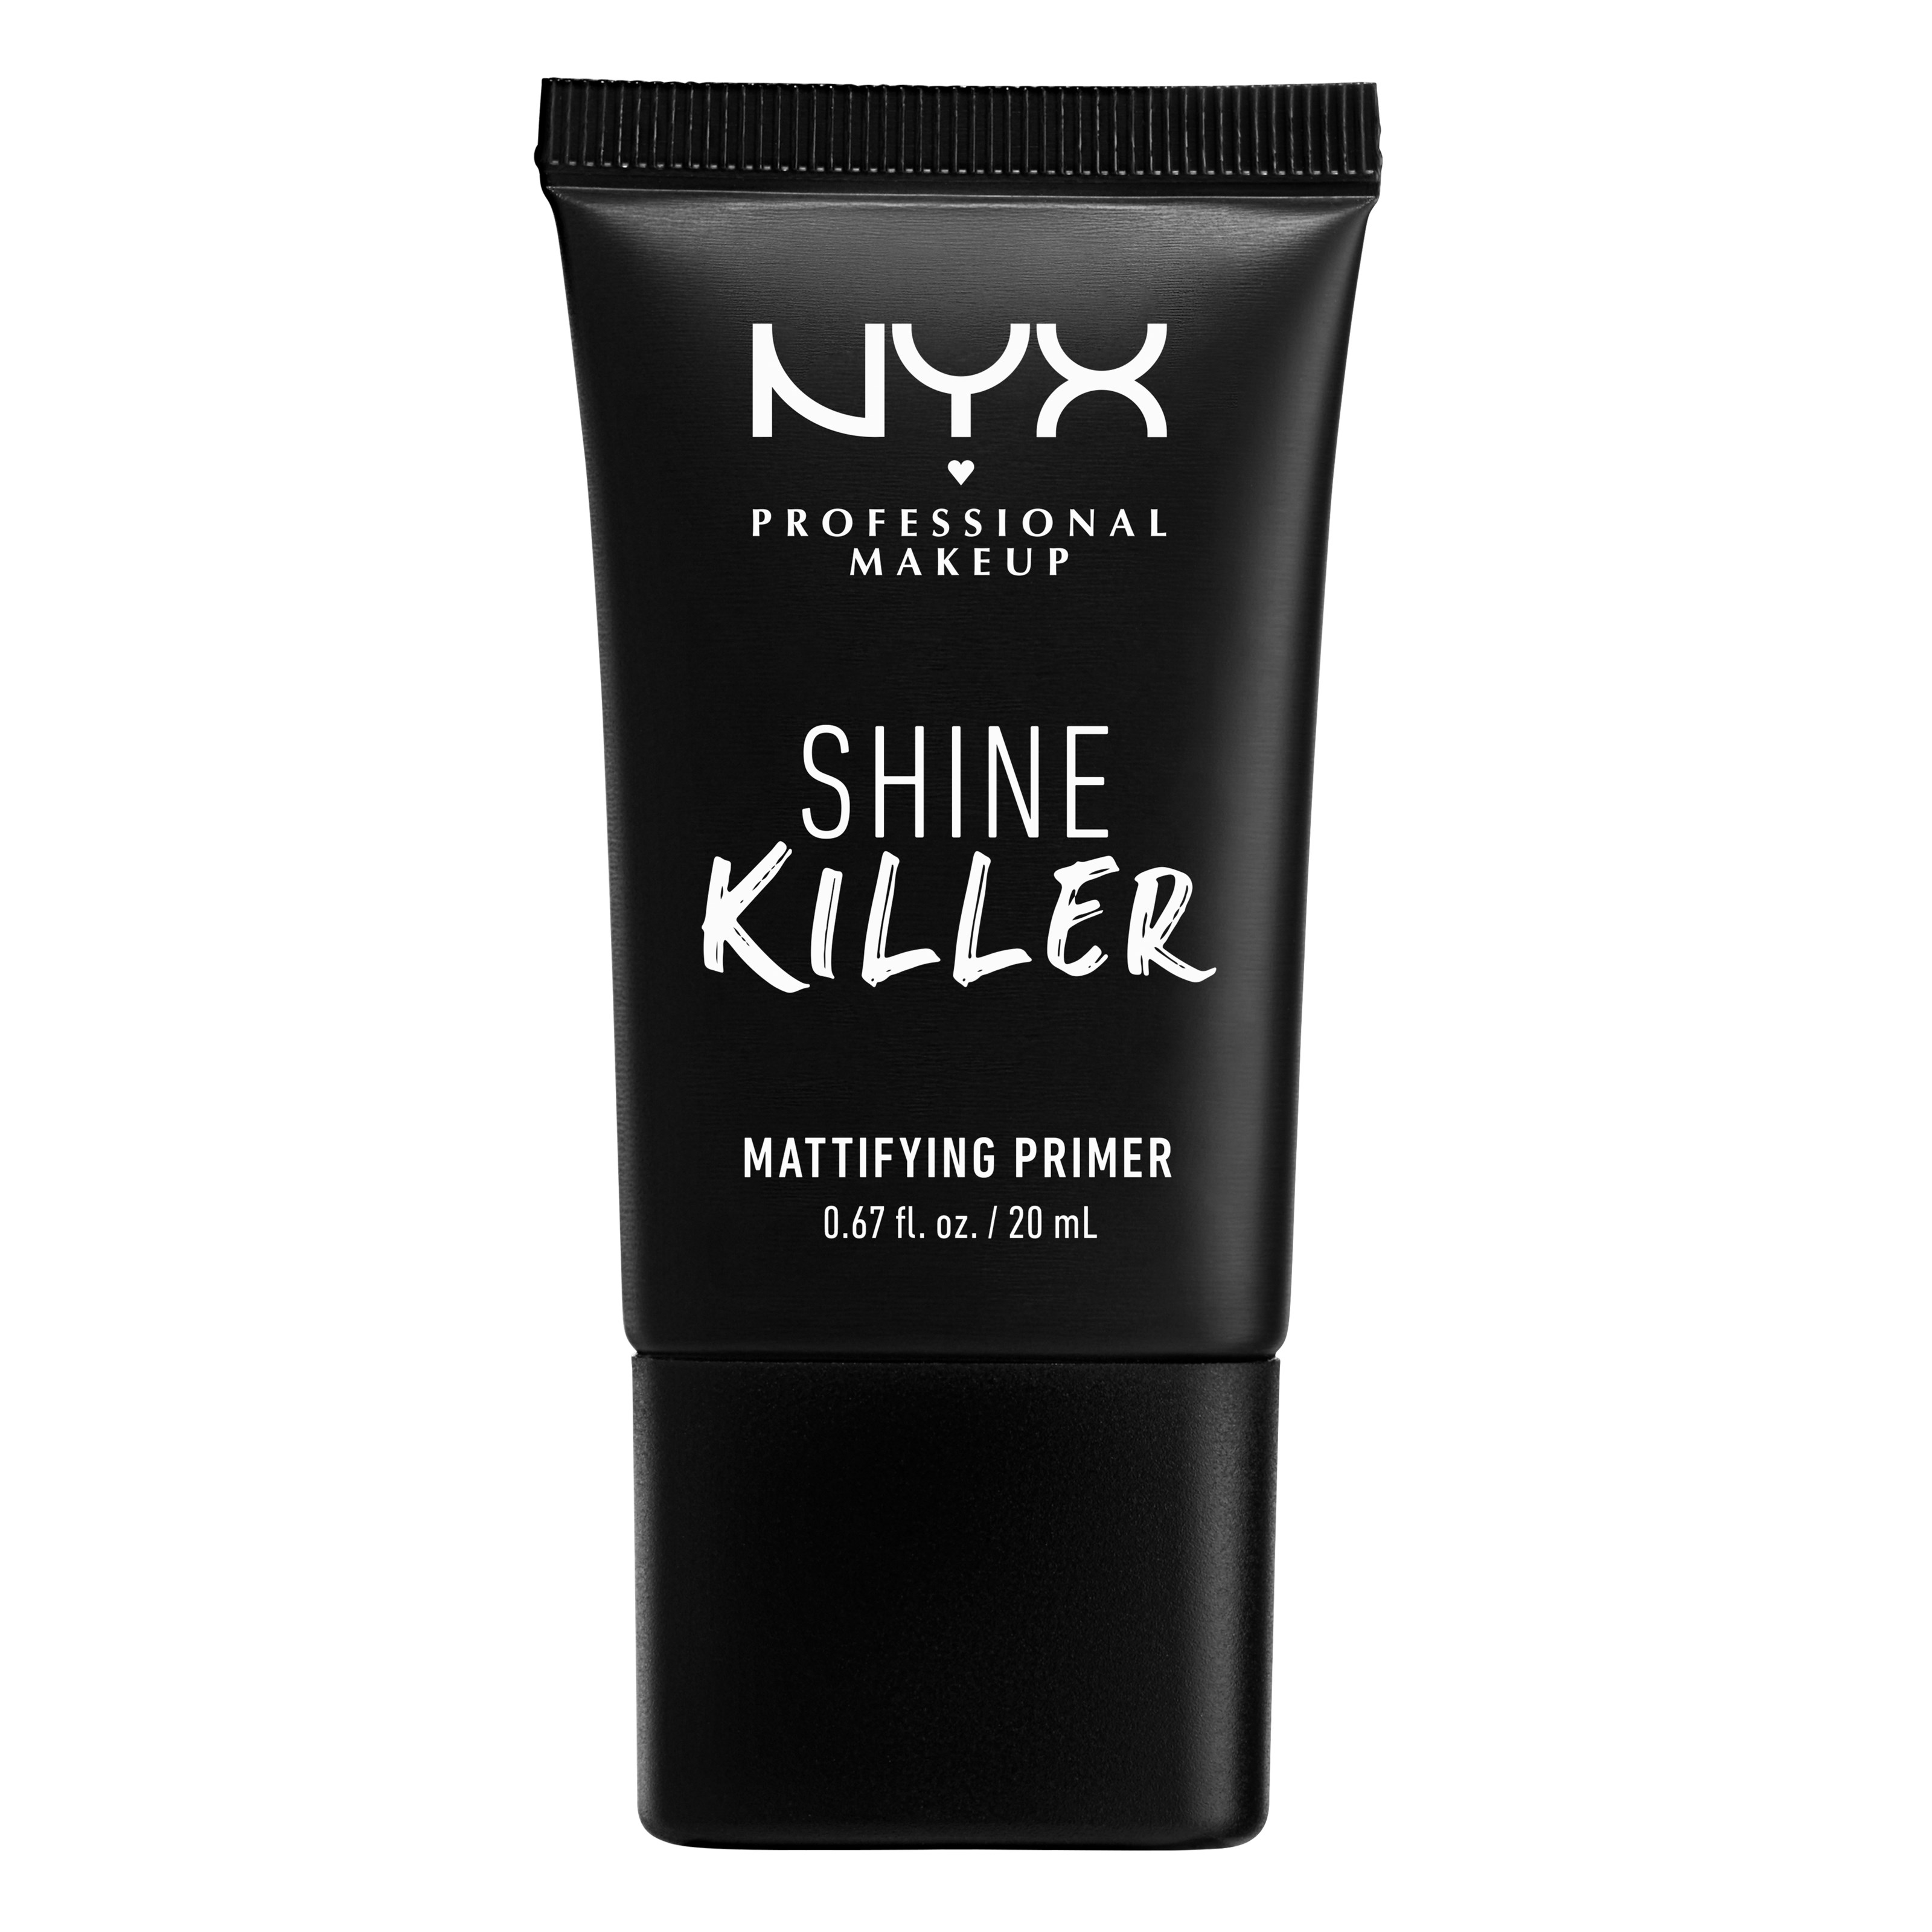 Zdjęcia - Podkład i baza pod makijaż NYX PROFESSIONAL MAKEUP Shine Killer Primer - Baza pod makijaż 20 